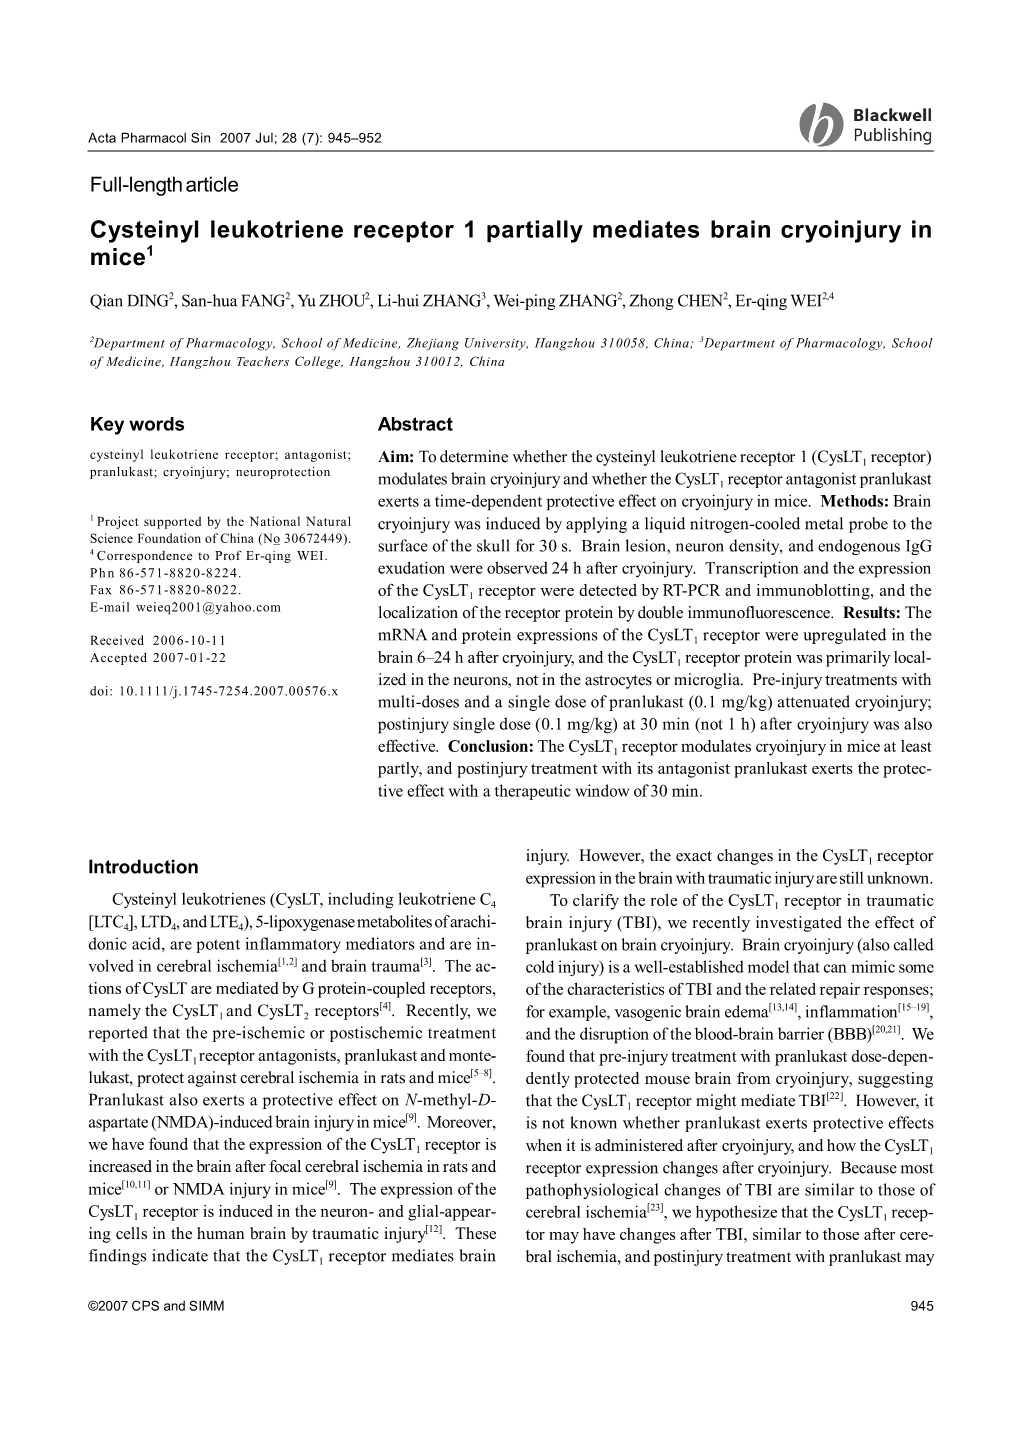 Cysteinyl Leukotriene Receptor 1 Partially Mediates Brain Cryoinjury in Mice1